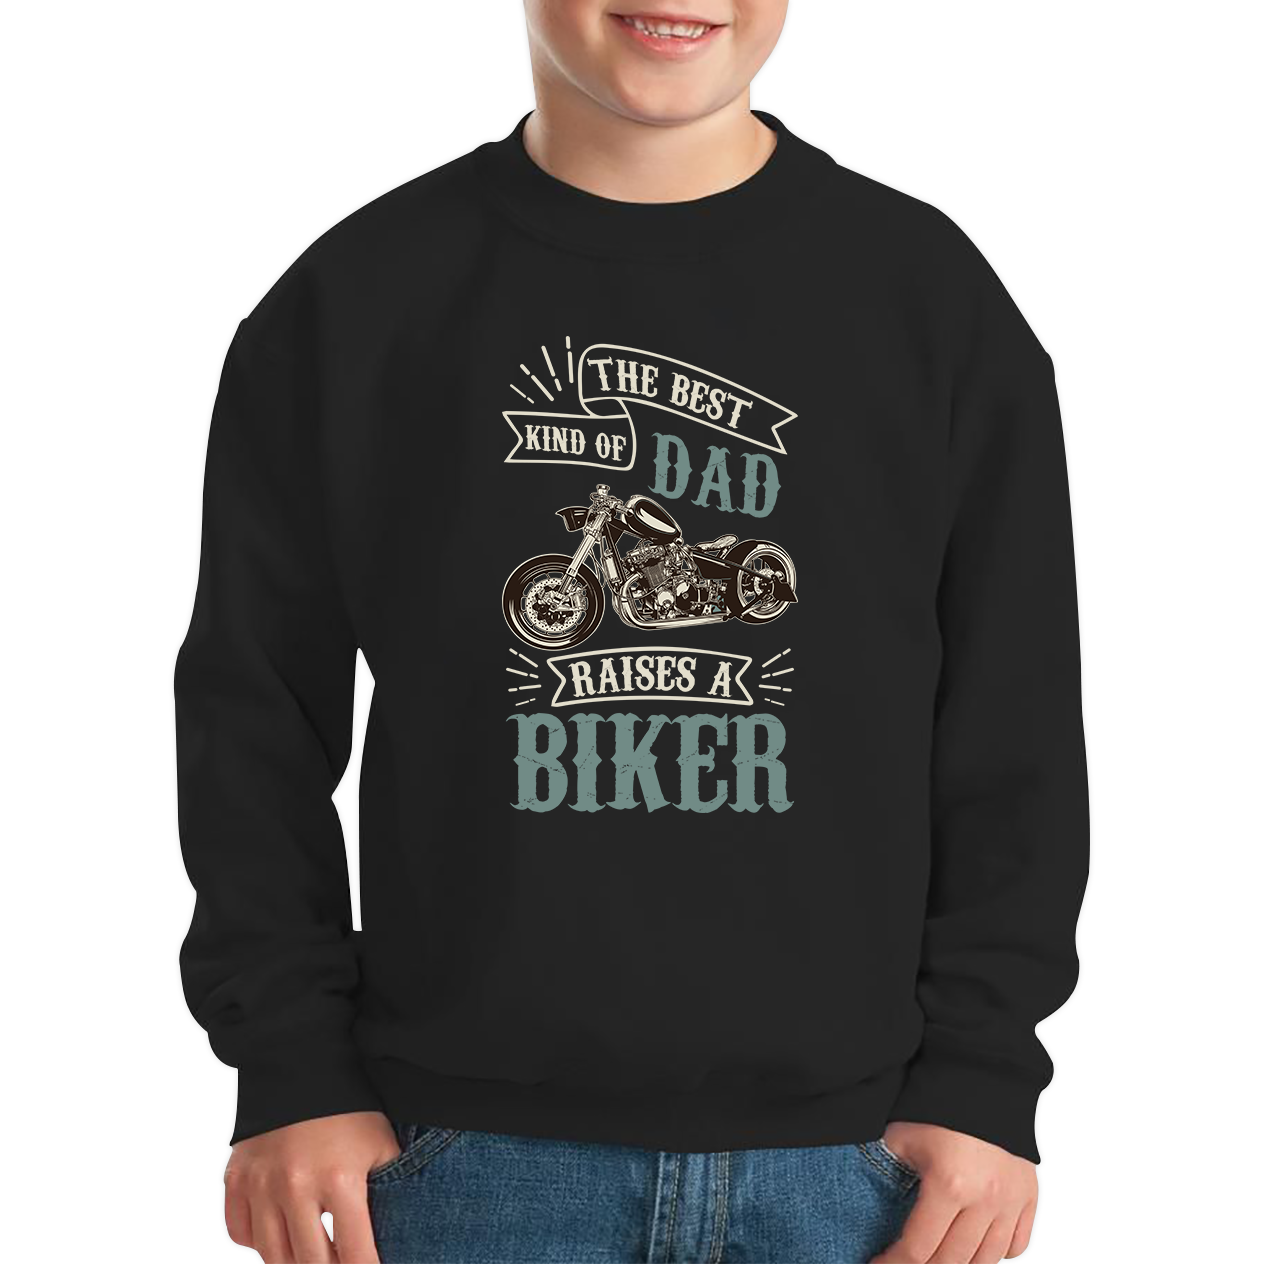 The Best Kind Of Dad Raises A Biker Jumper Father's Day Funny Bike Lover Racers Kids Sweatshirt